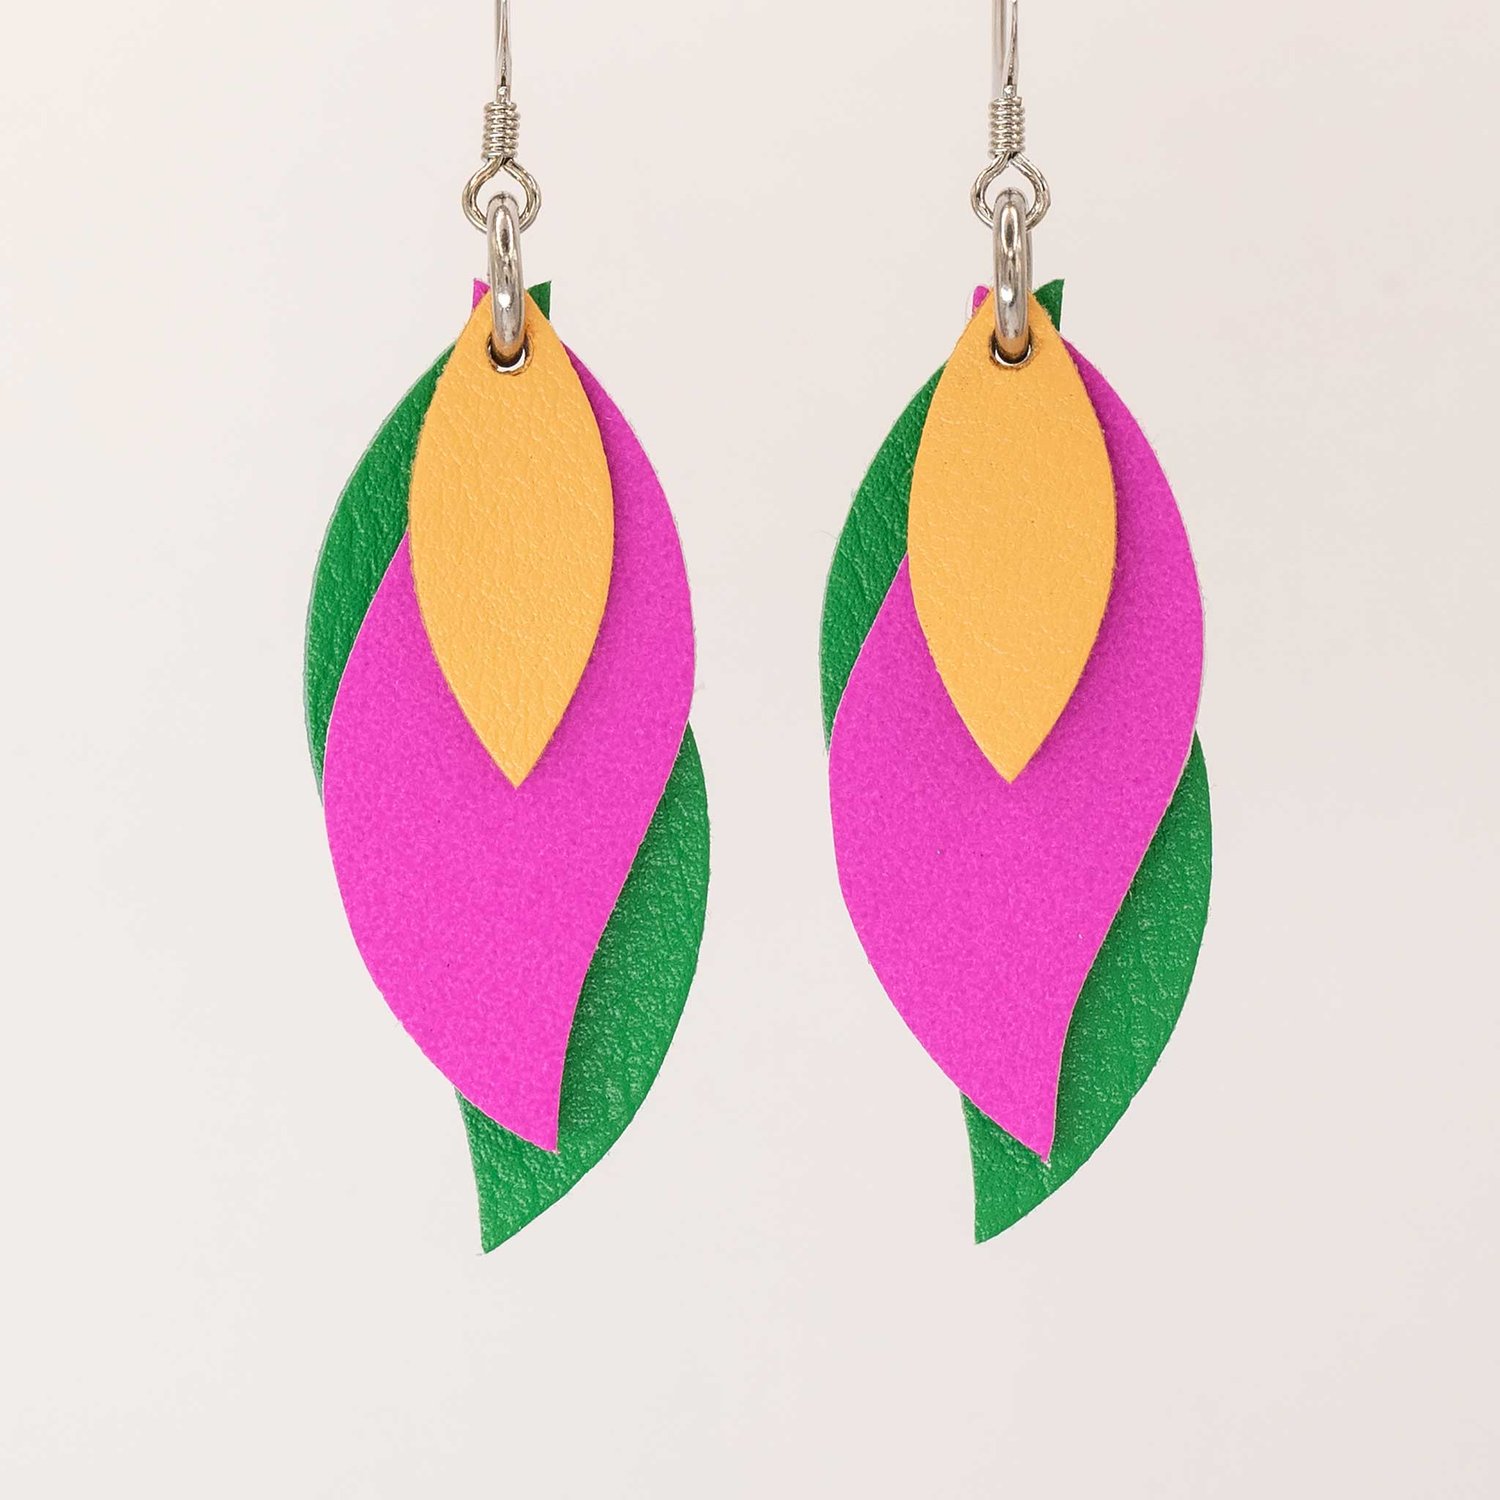 Image of Handmade Australian leather leaf earrings - Soft apricot orange, hot pink, fern green [LPG-431]